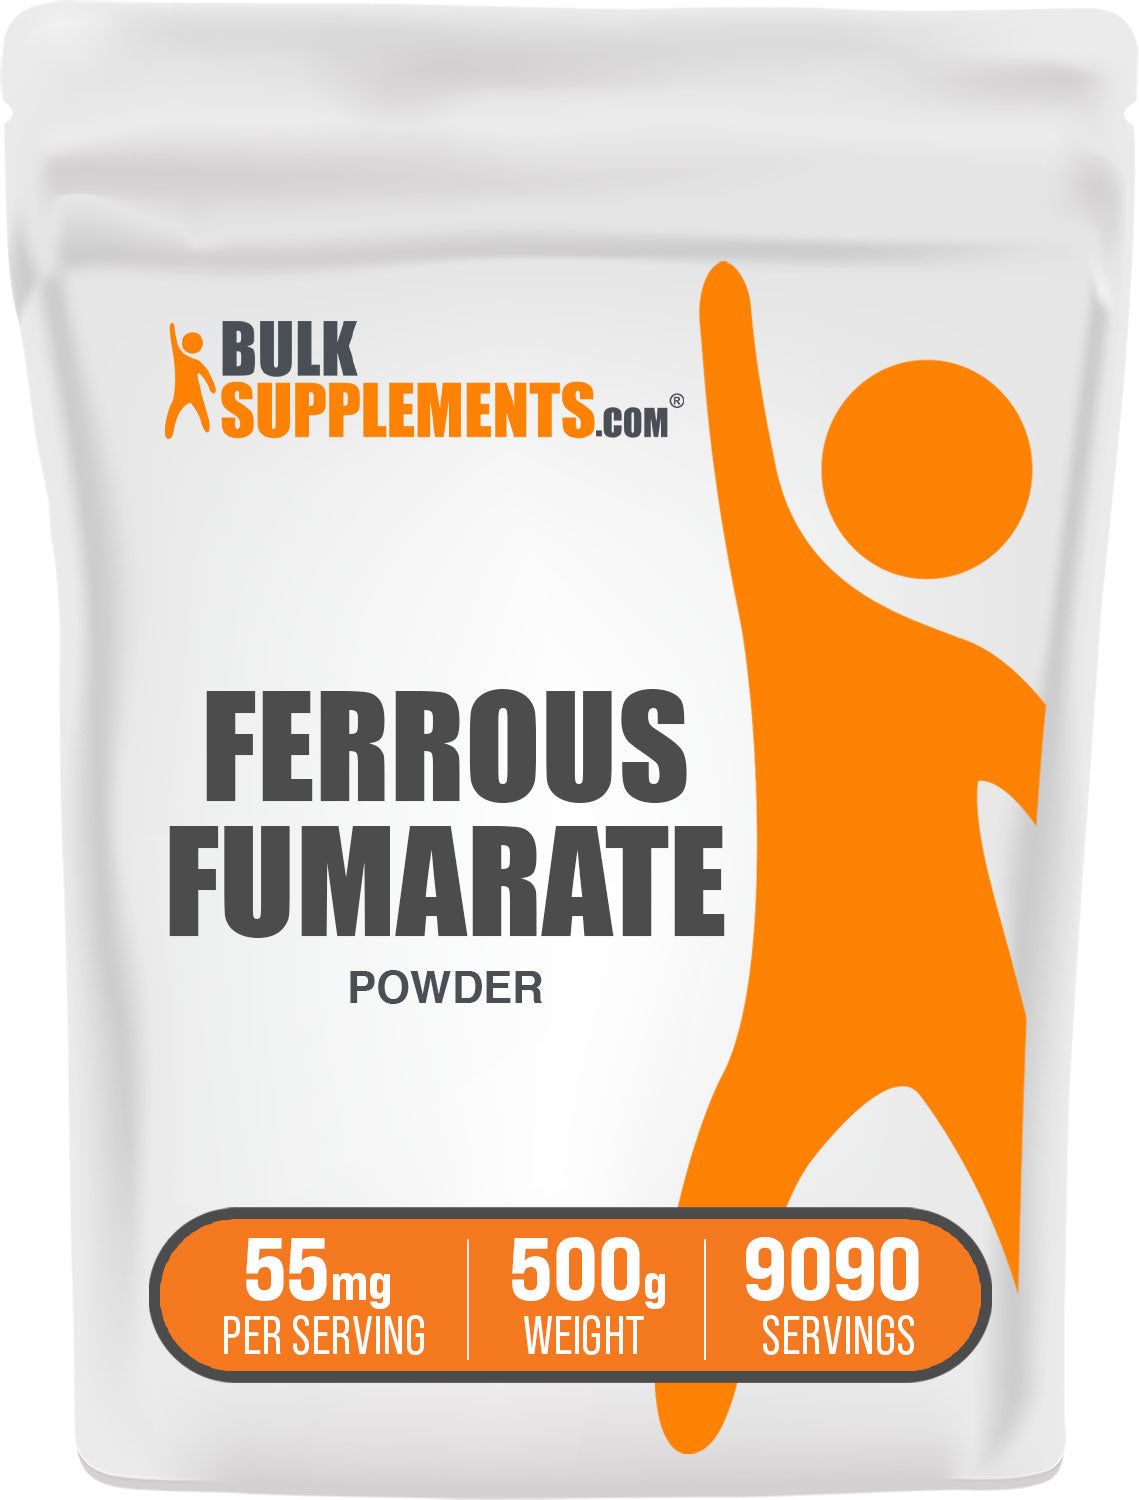 BulkSupplements.com Ferrous Fumarate Powder 500g Bag